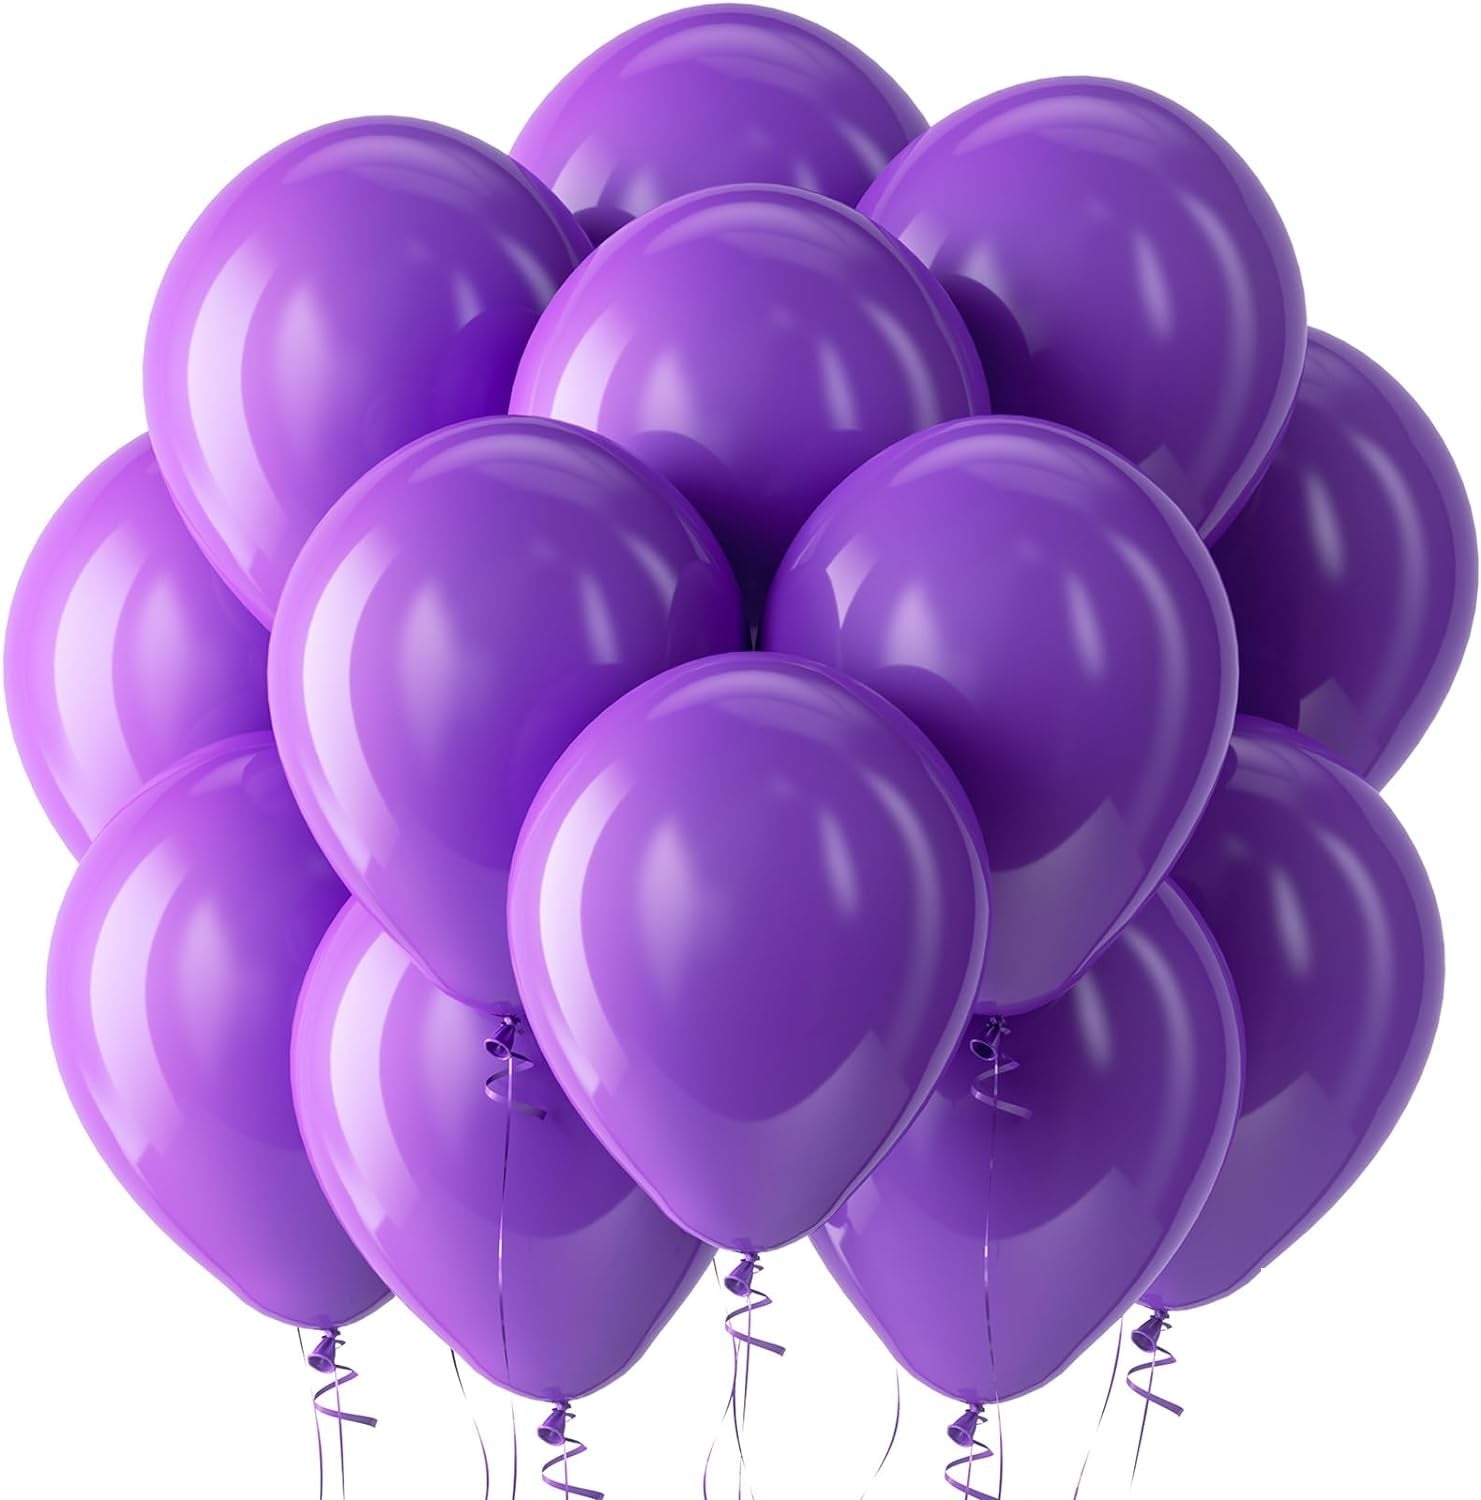 12 Inch Metalic Balloons